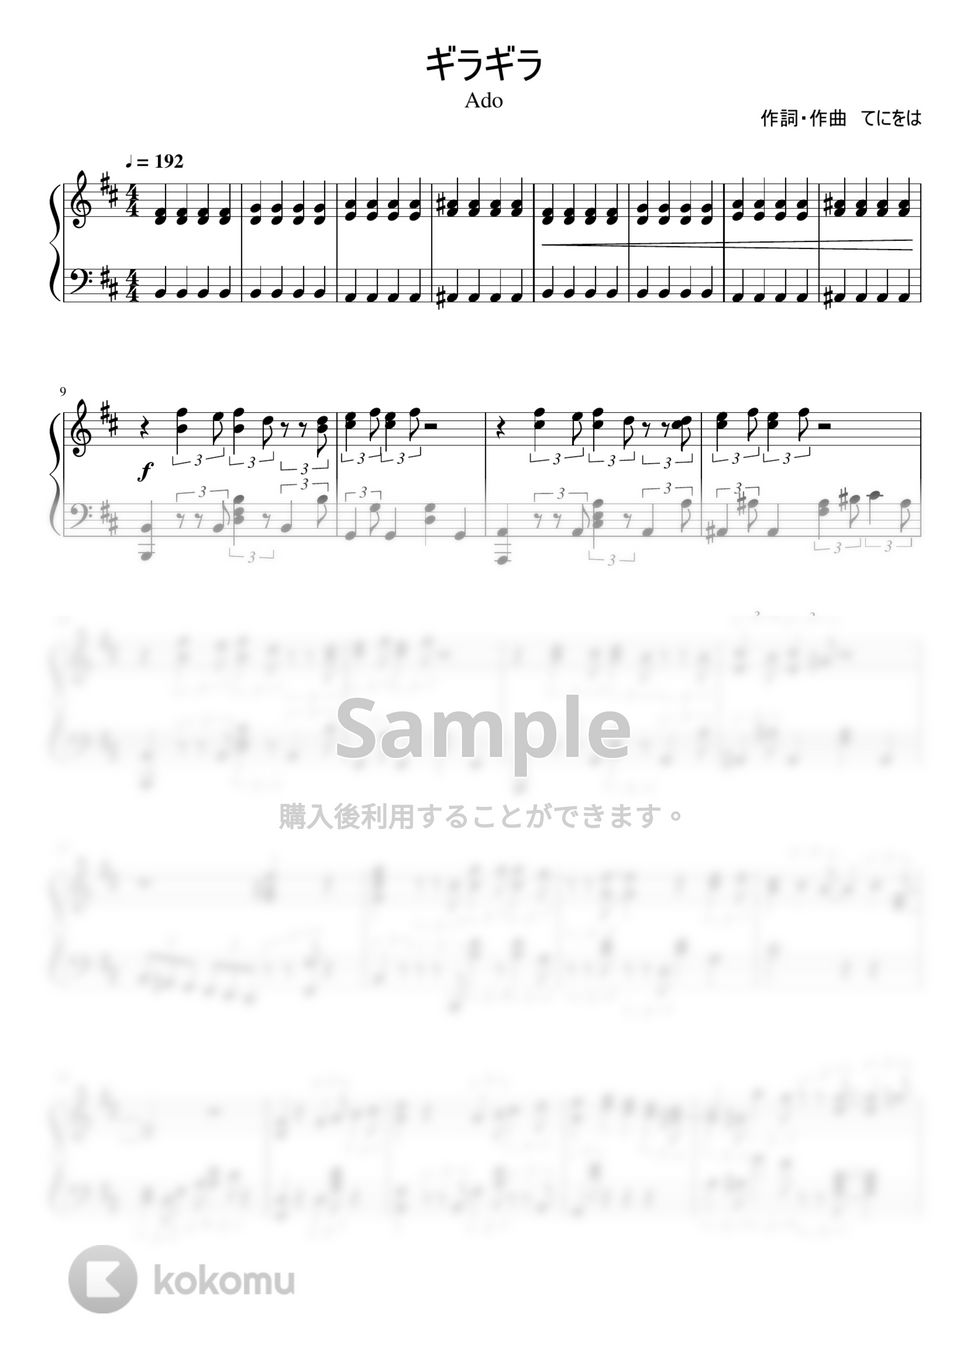 Ado - ギラギラ (ピアノ楽譜) by LEID